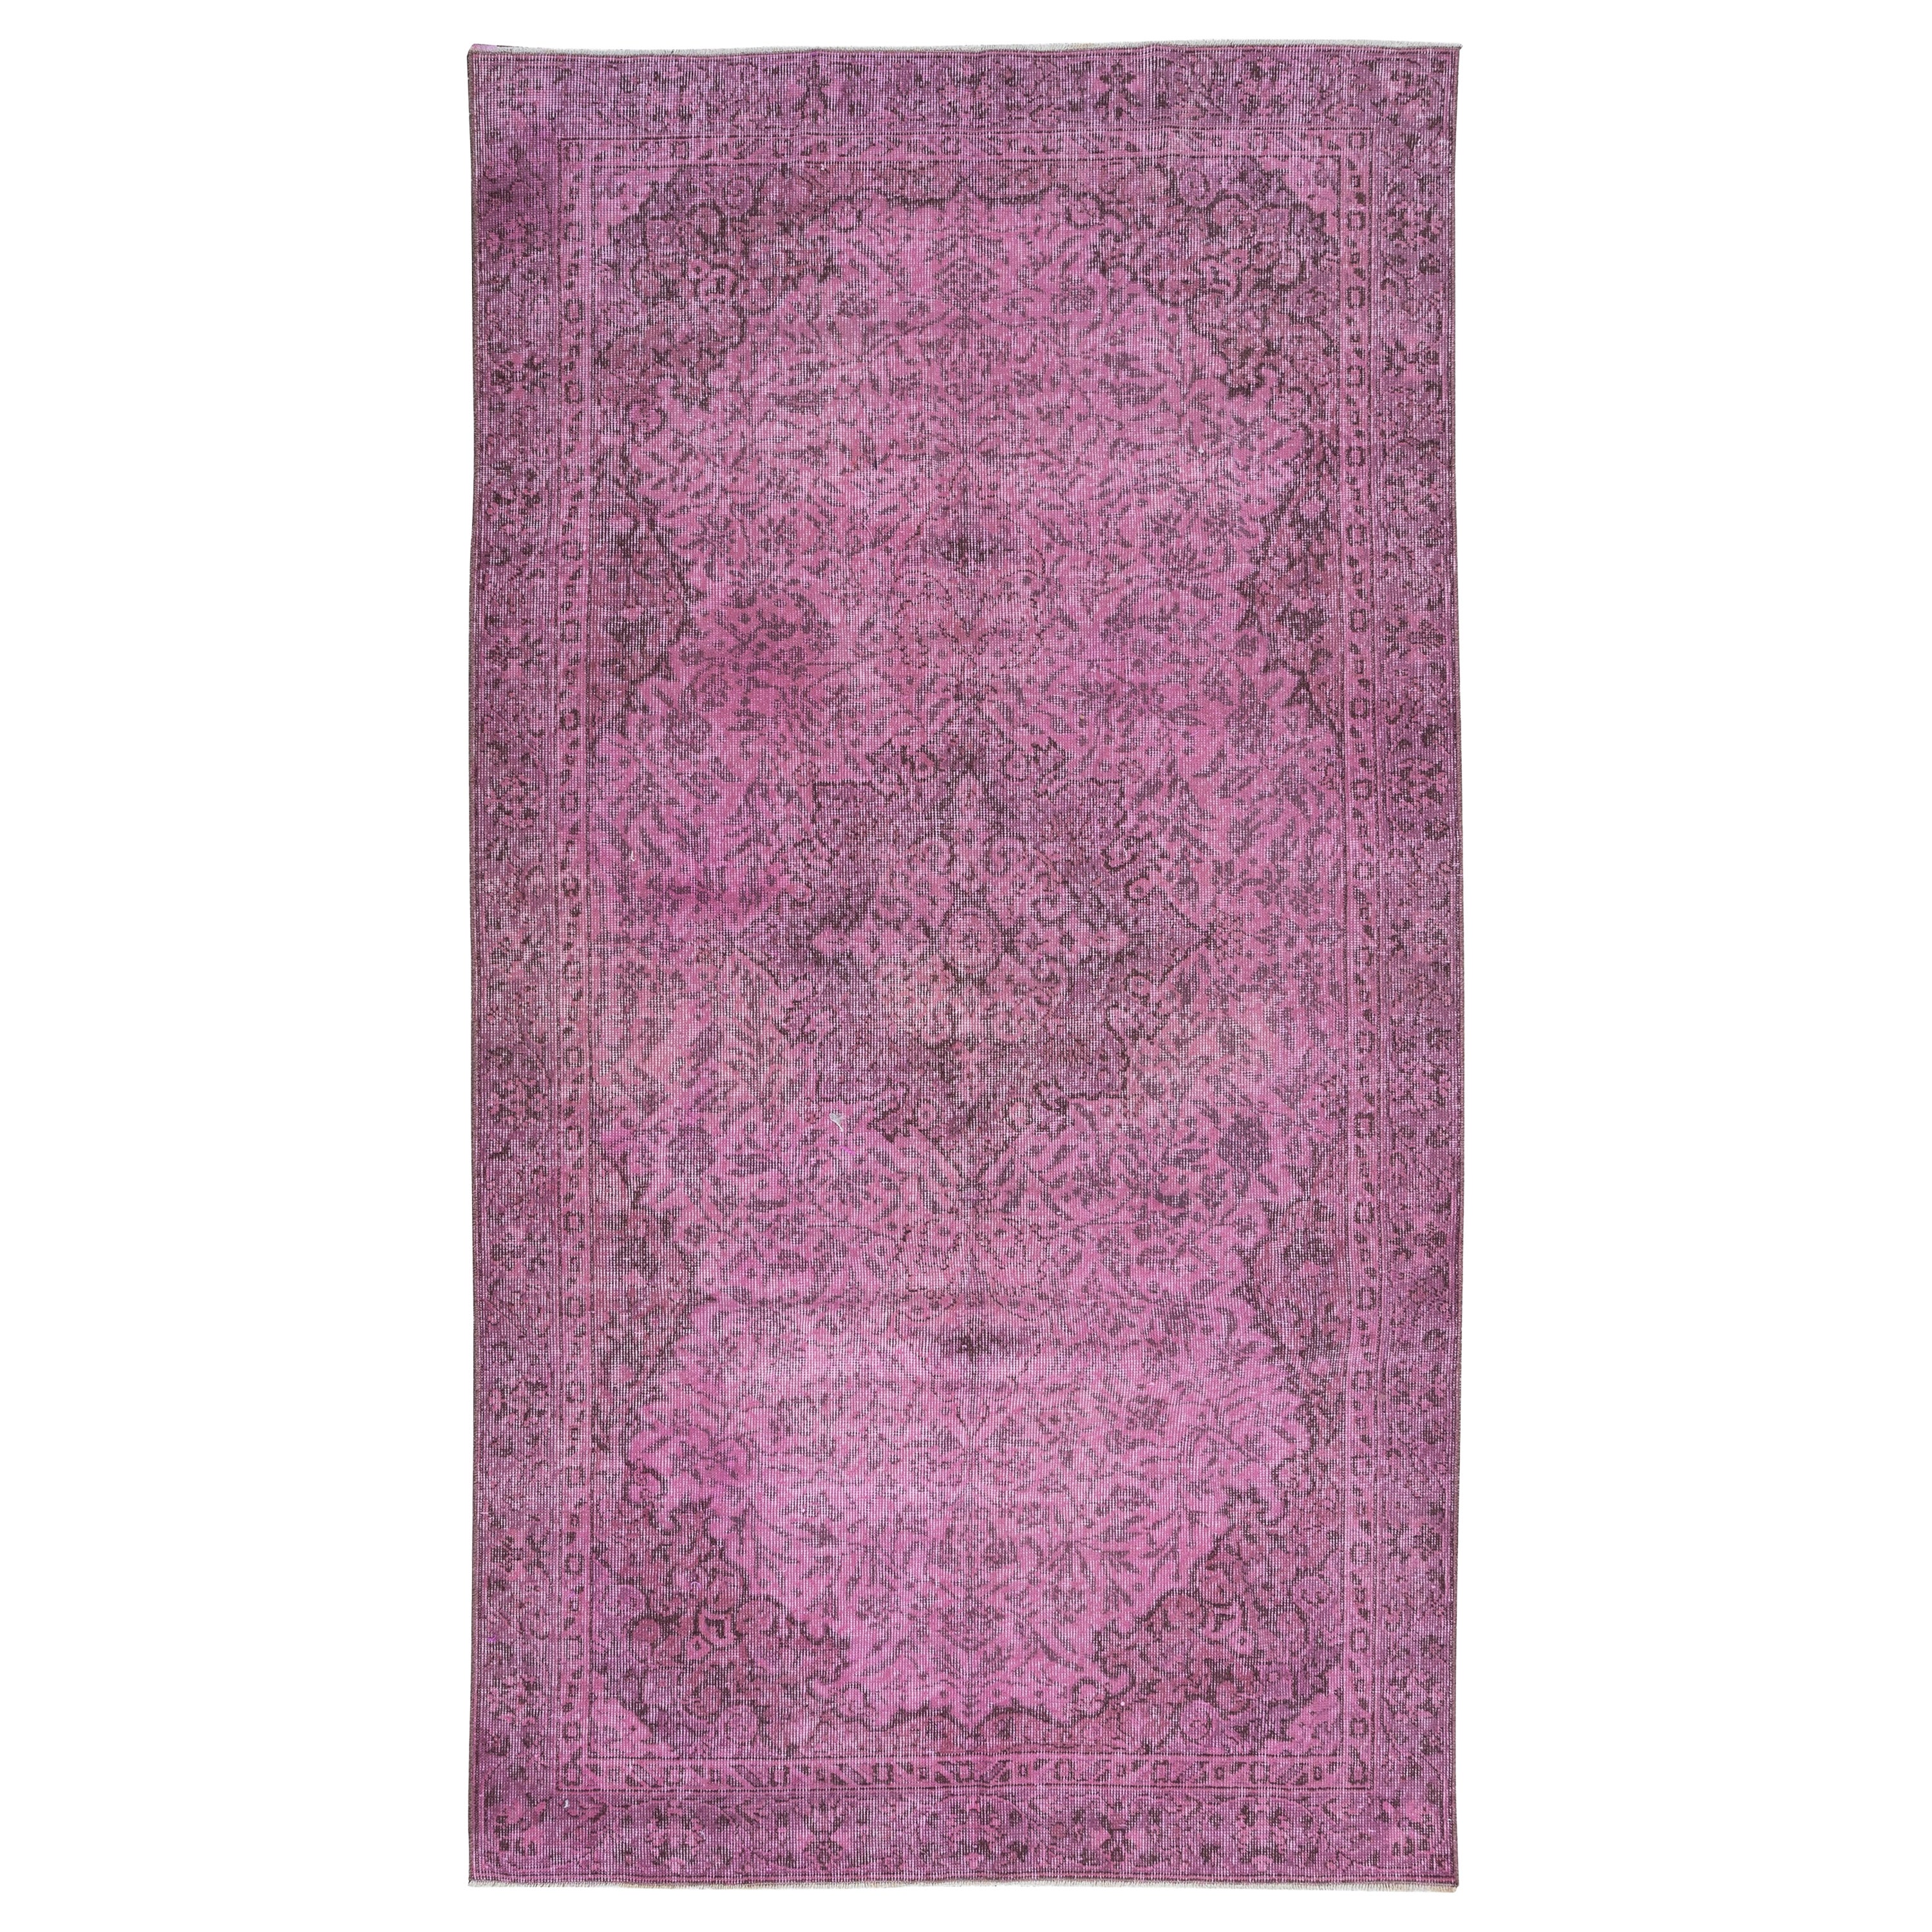 5x8.7 Ft Modernity Floor Area Rug in Pink, Handwoven and Handknotted in Turkey (Tapis de sol moderne en rose, tissé et noué à la main en Turquie)